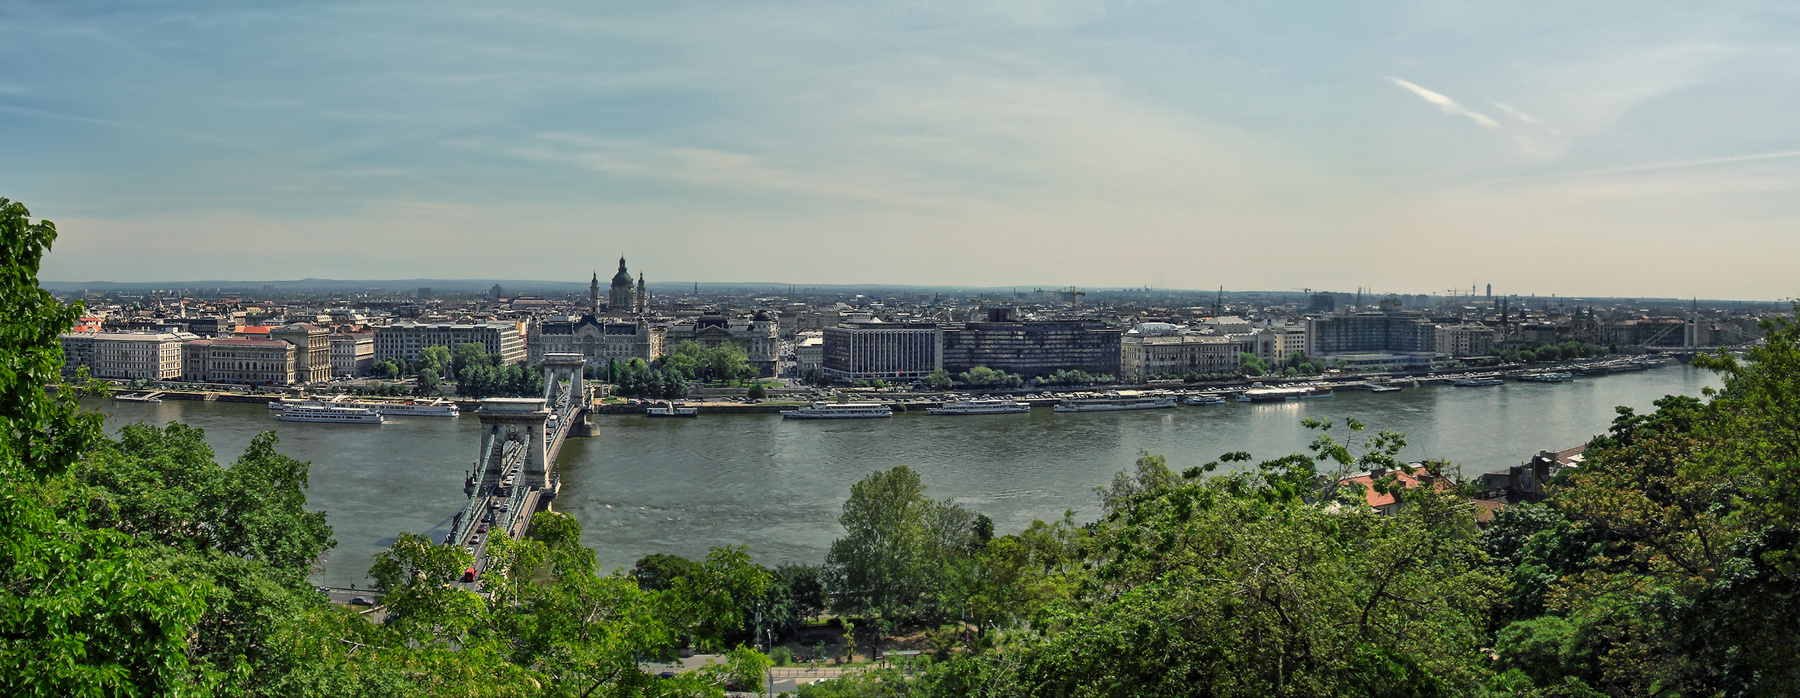 ***Будапешт.Дунай.Весна. 